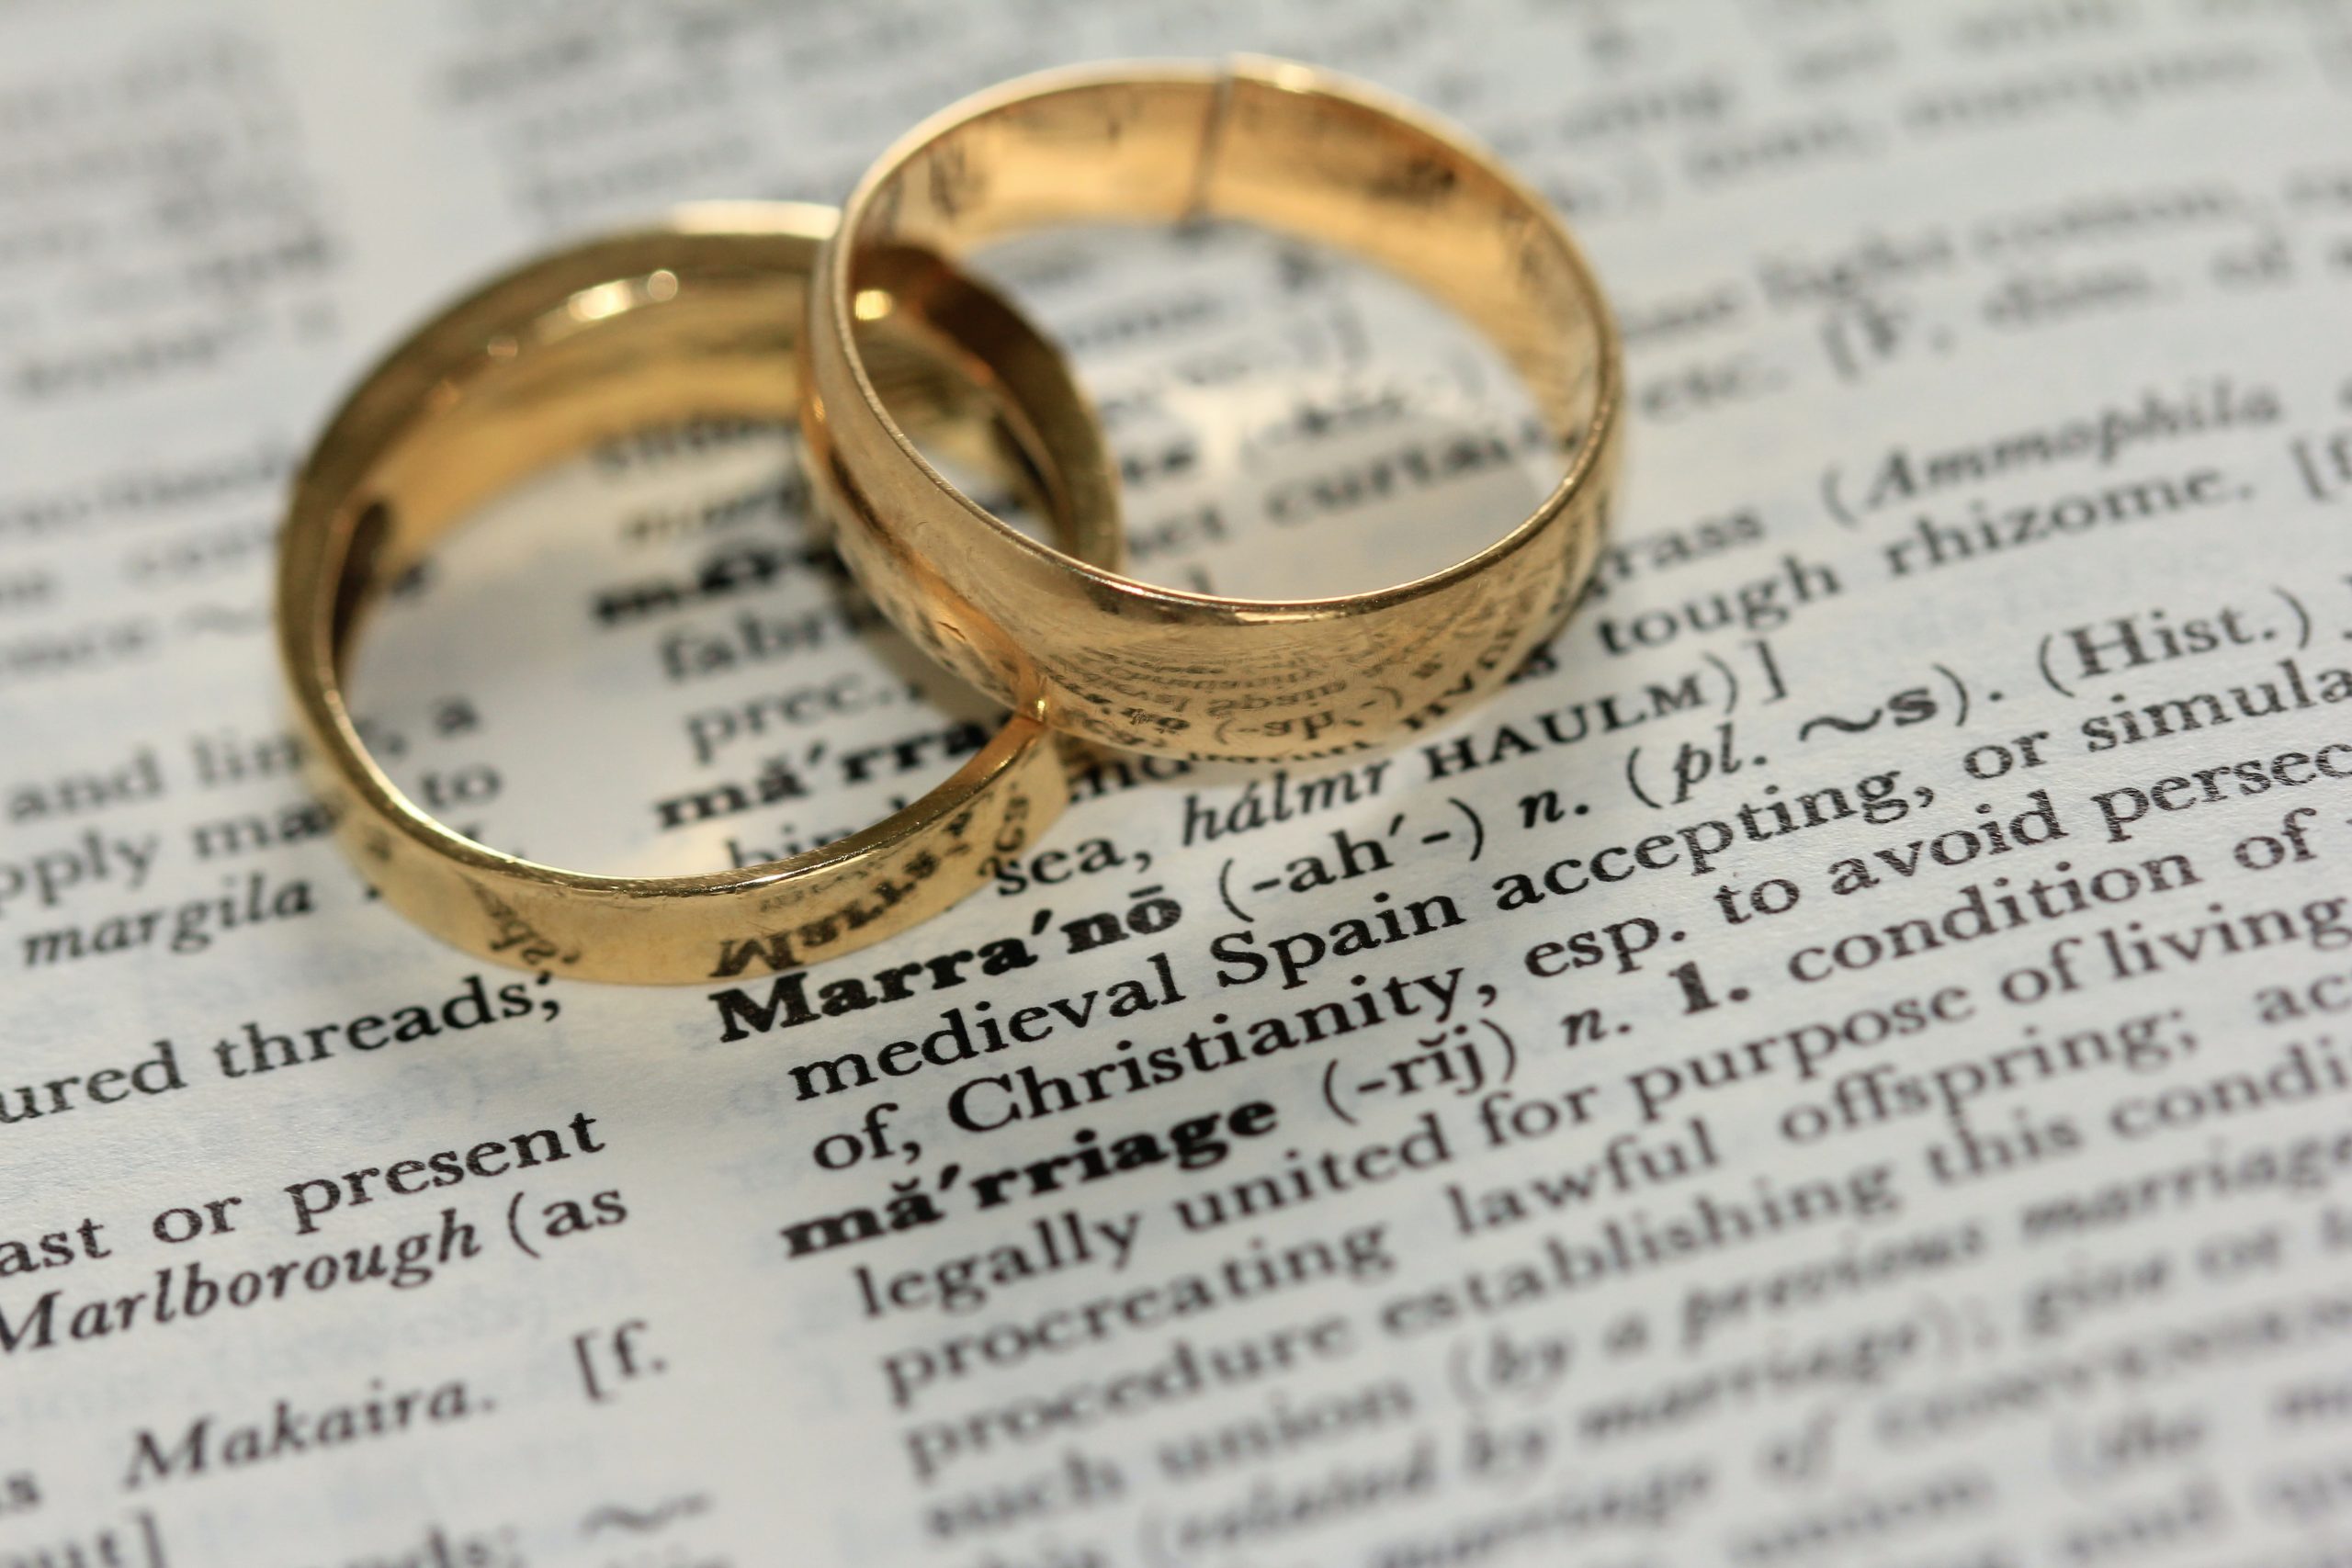 Aristotelian Gay Marriage? A Response to Gunther Laird